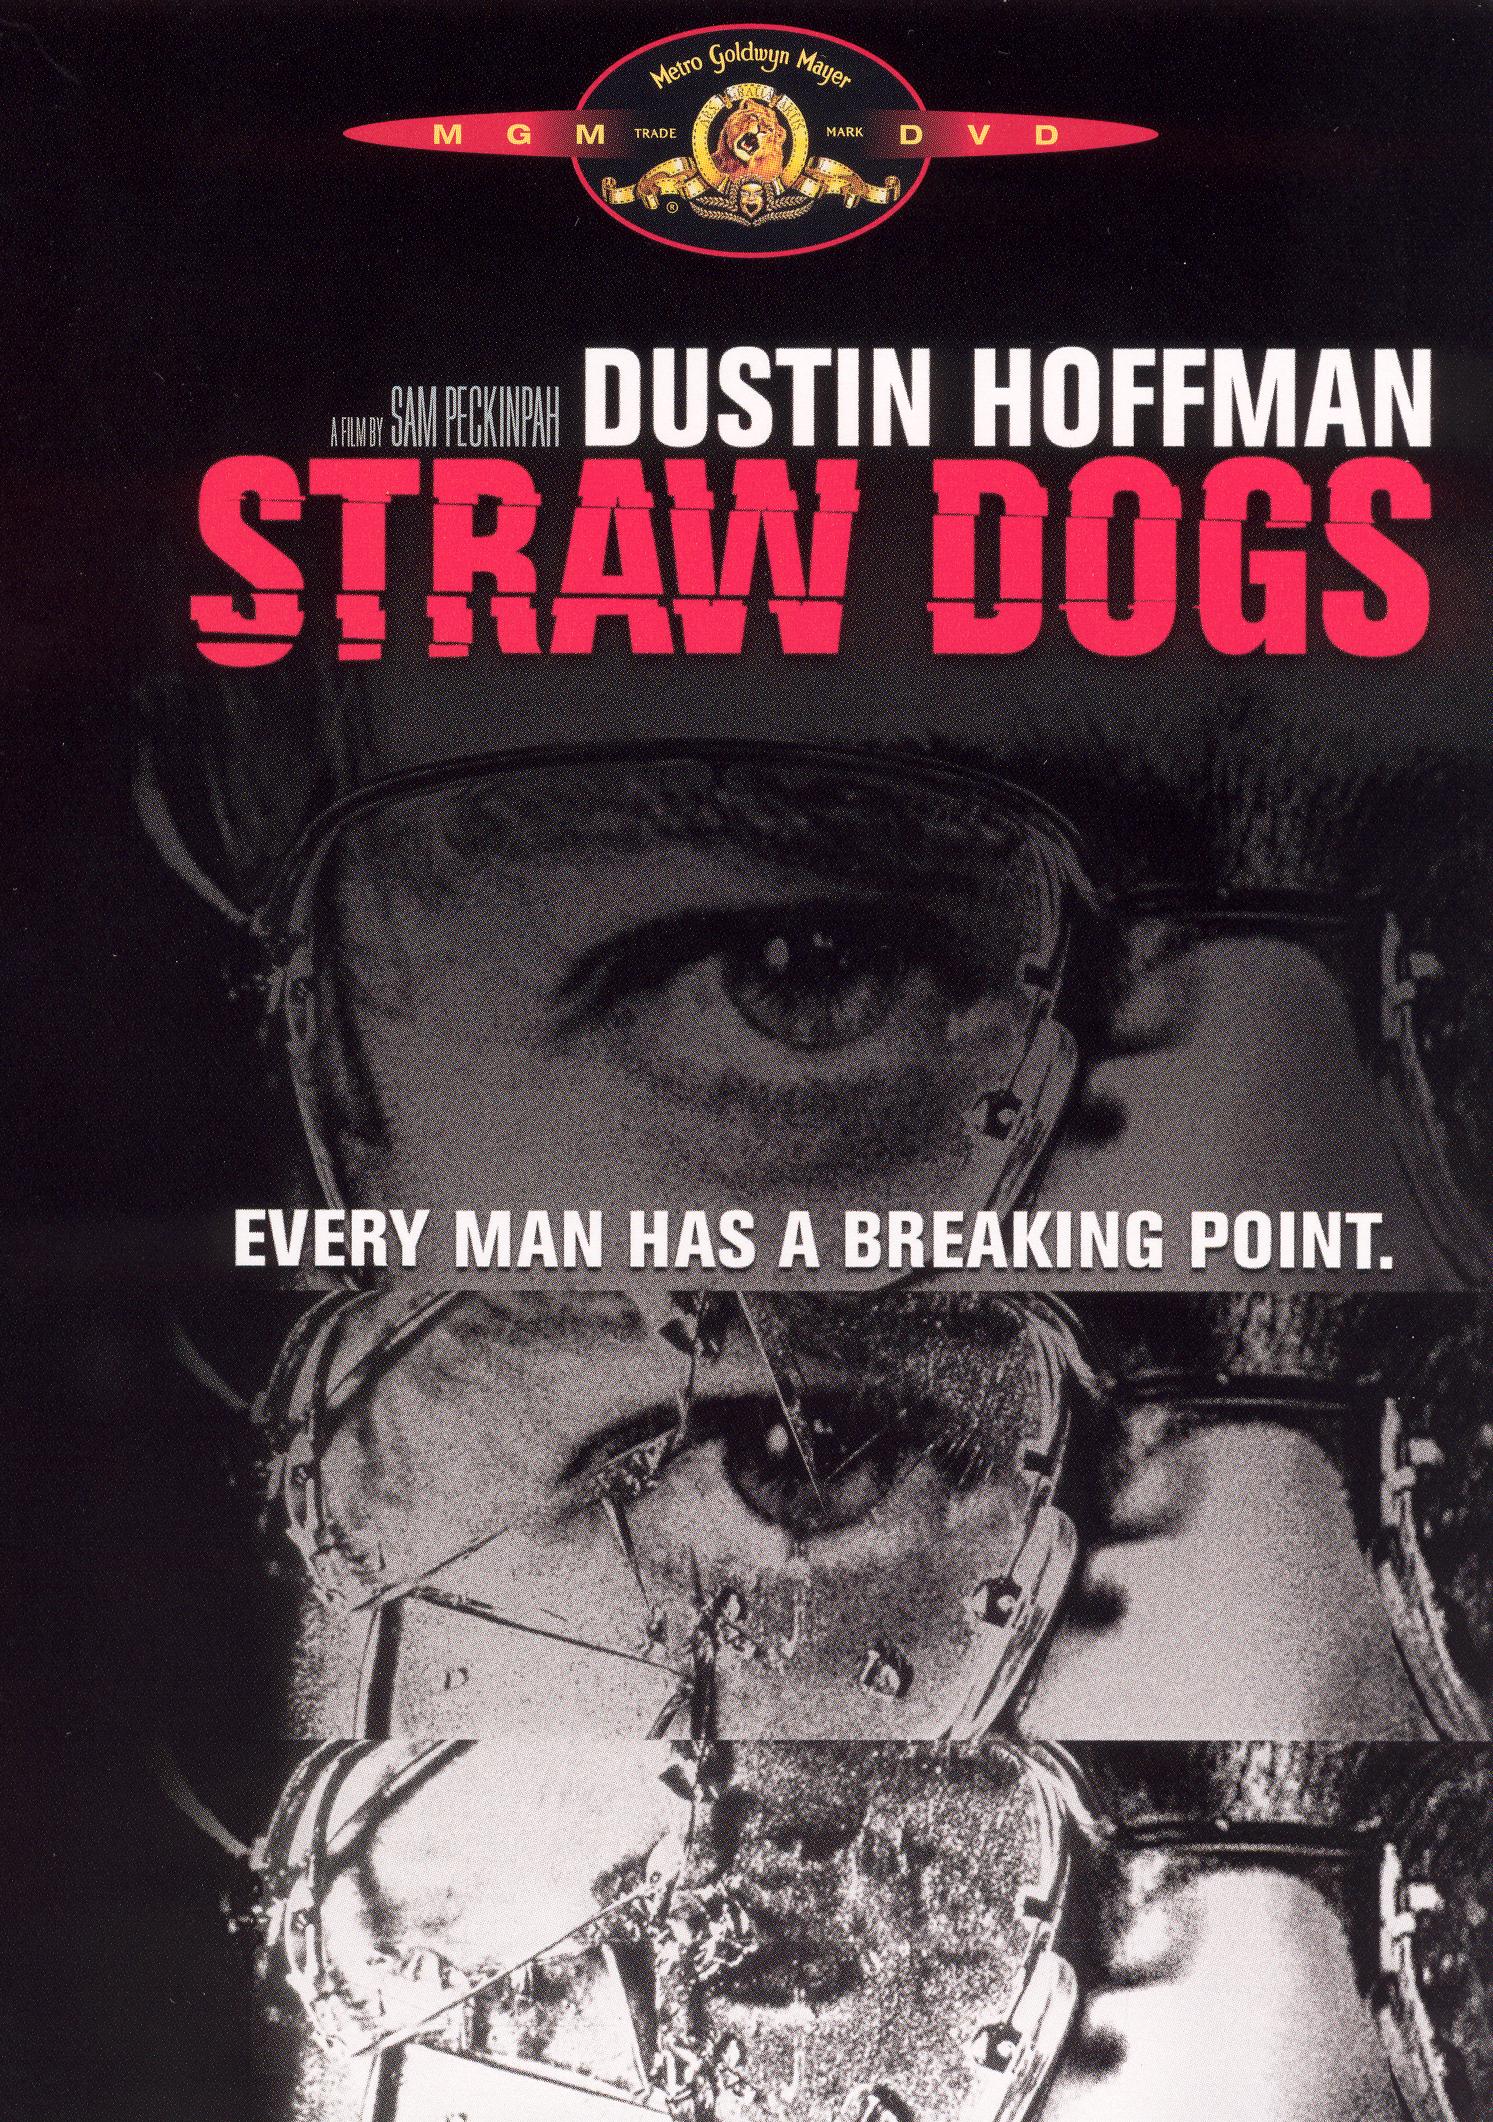 The Night Cruiser: Custom DVD Cover: Straw Dogs